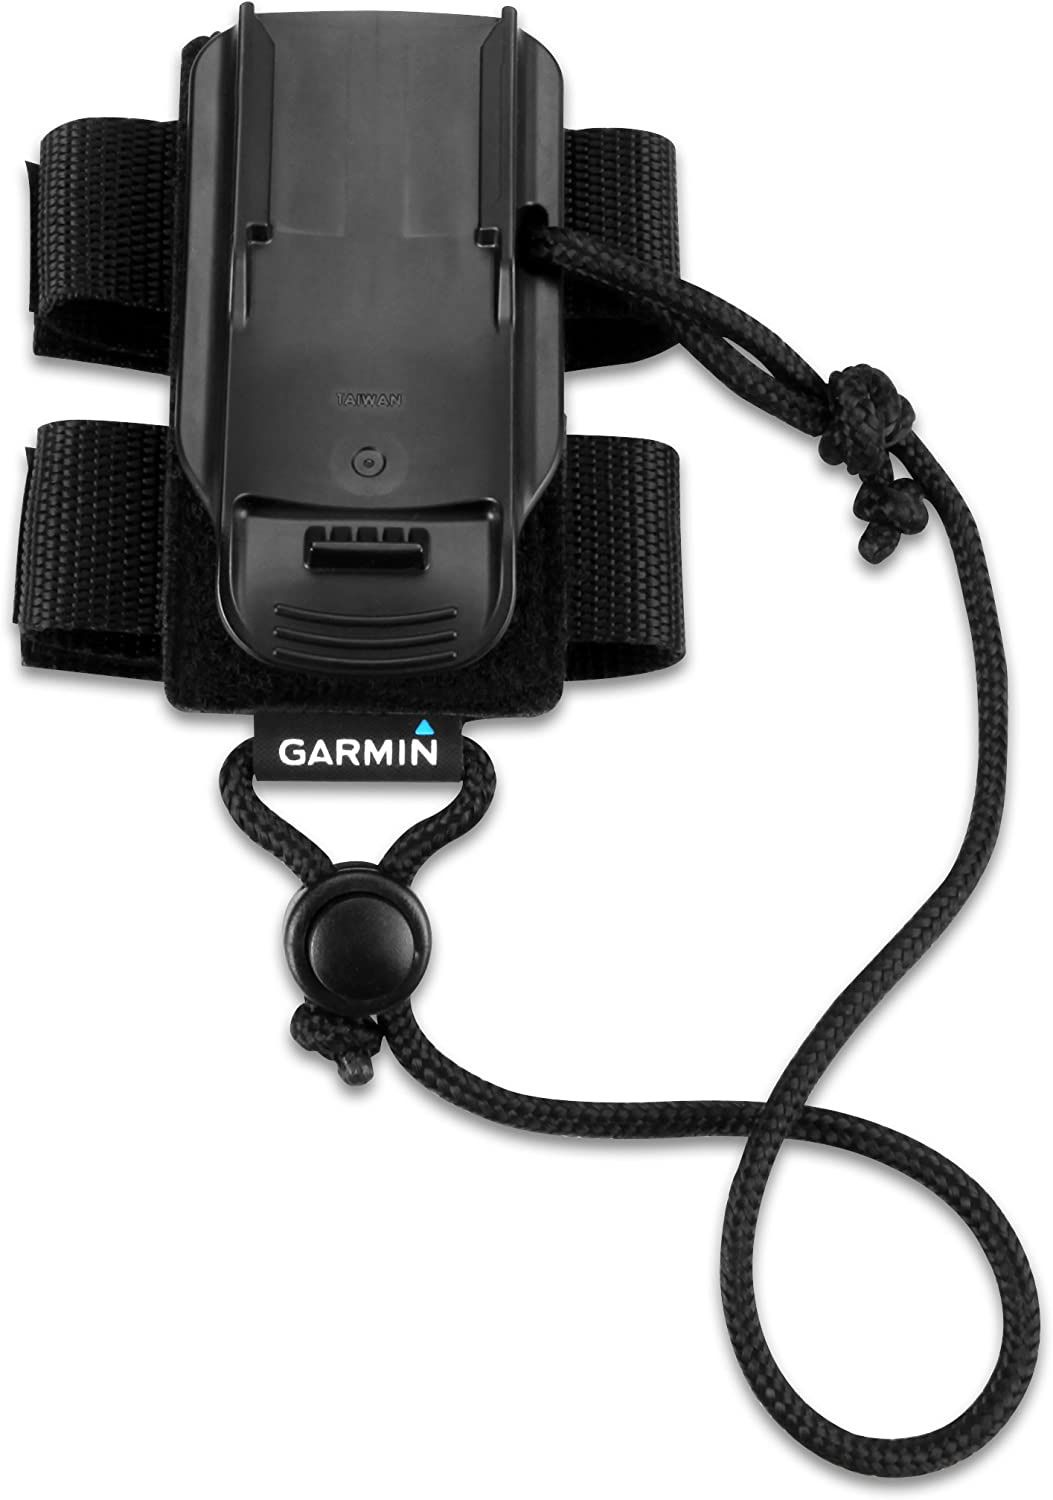 Garmin Backpack Tether… for an in reach mini